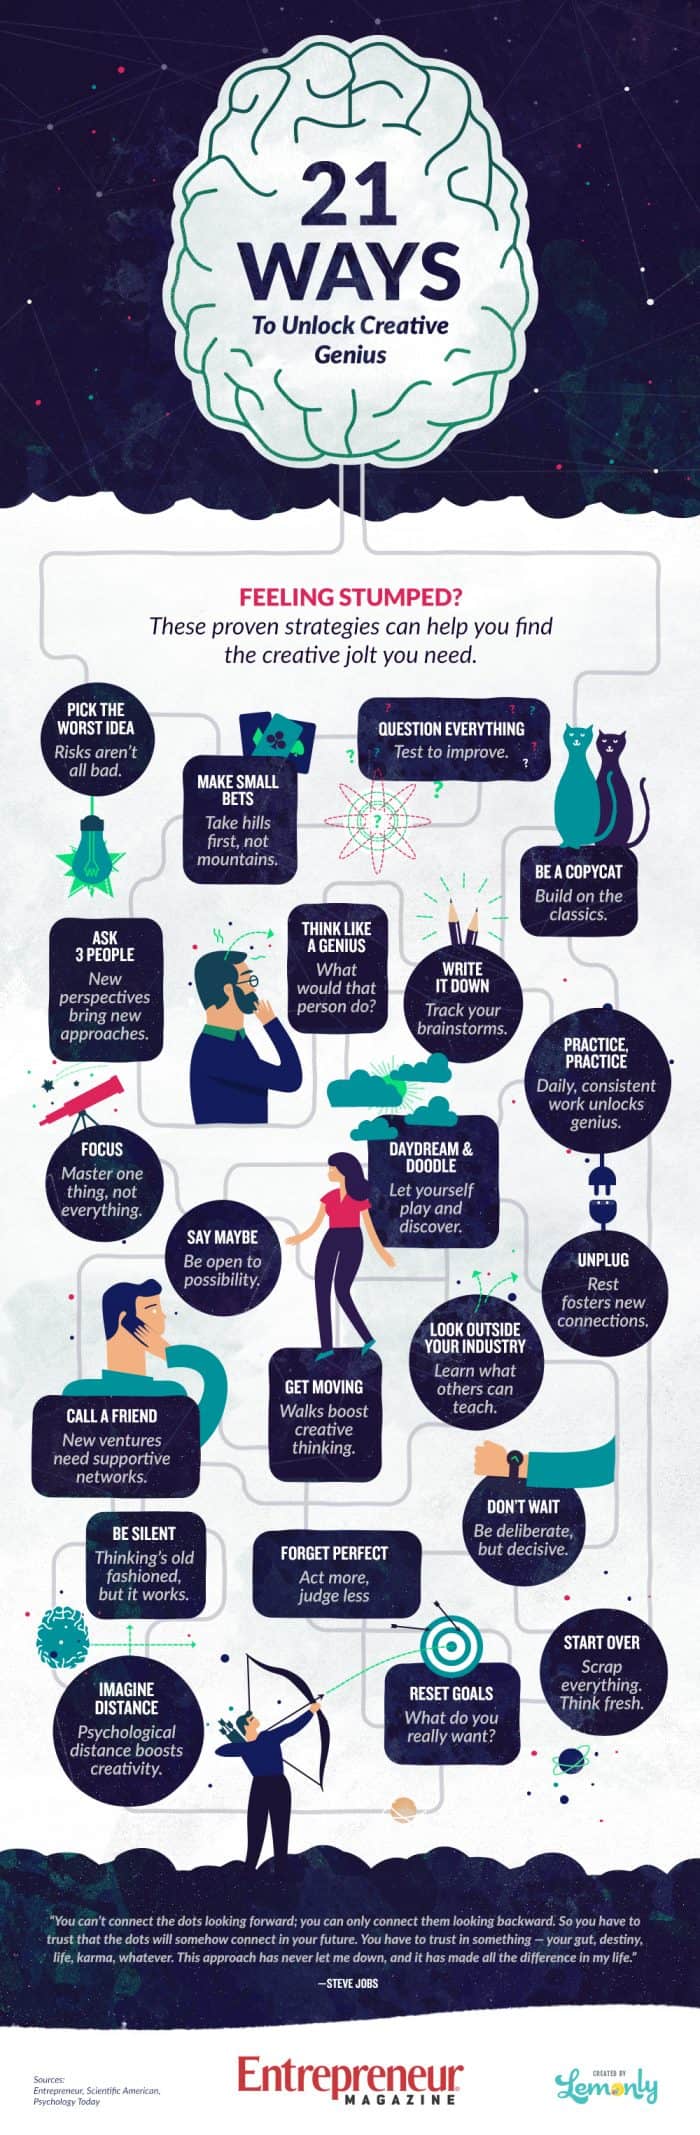 21 Ways to Unlock Your Creative Genius Infographic